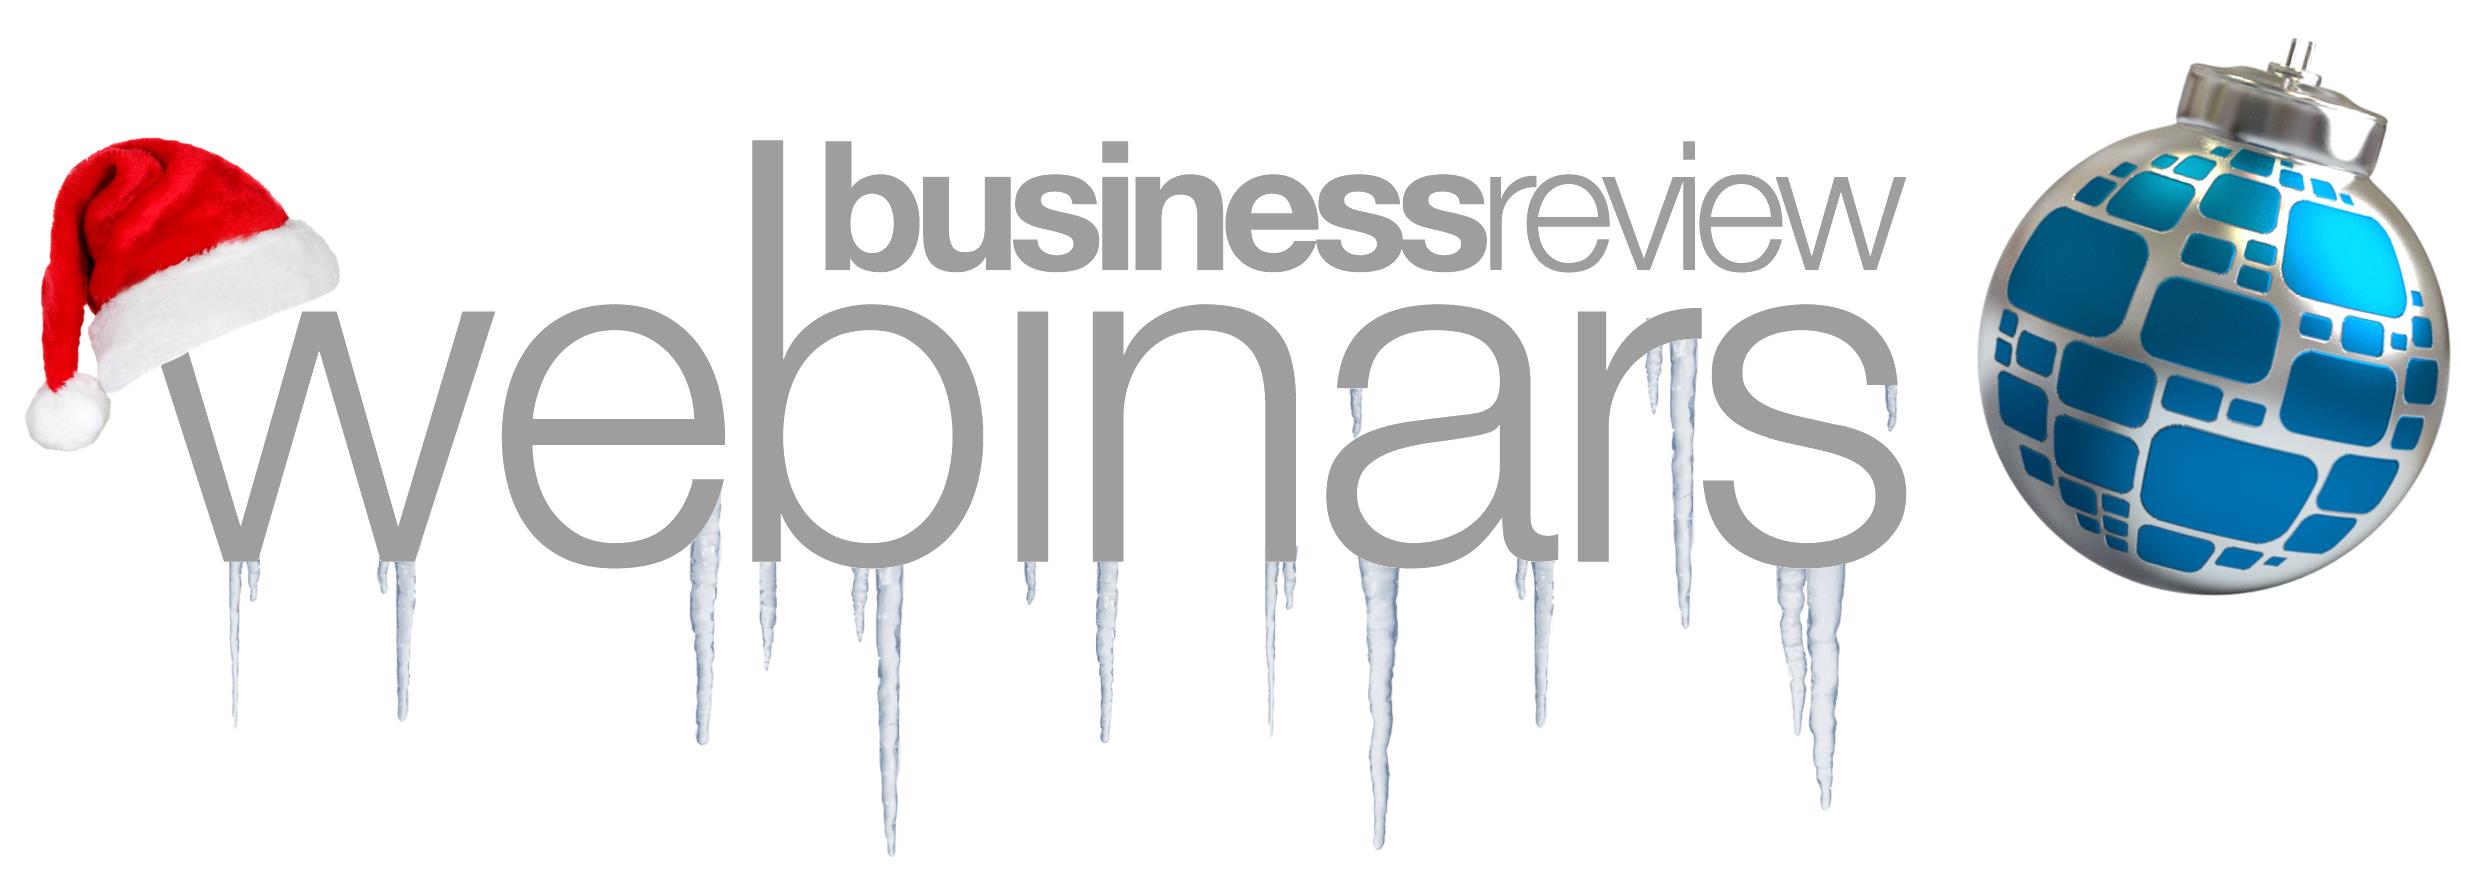 Business Review Webinars